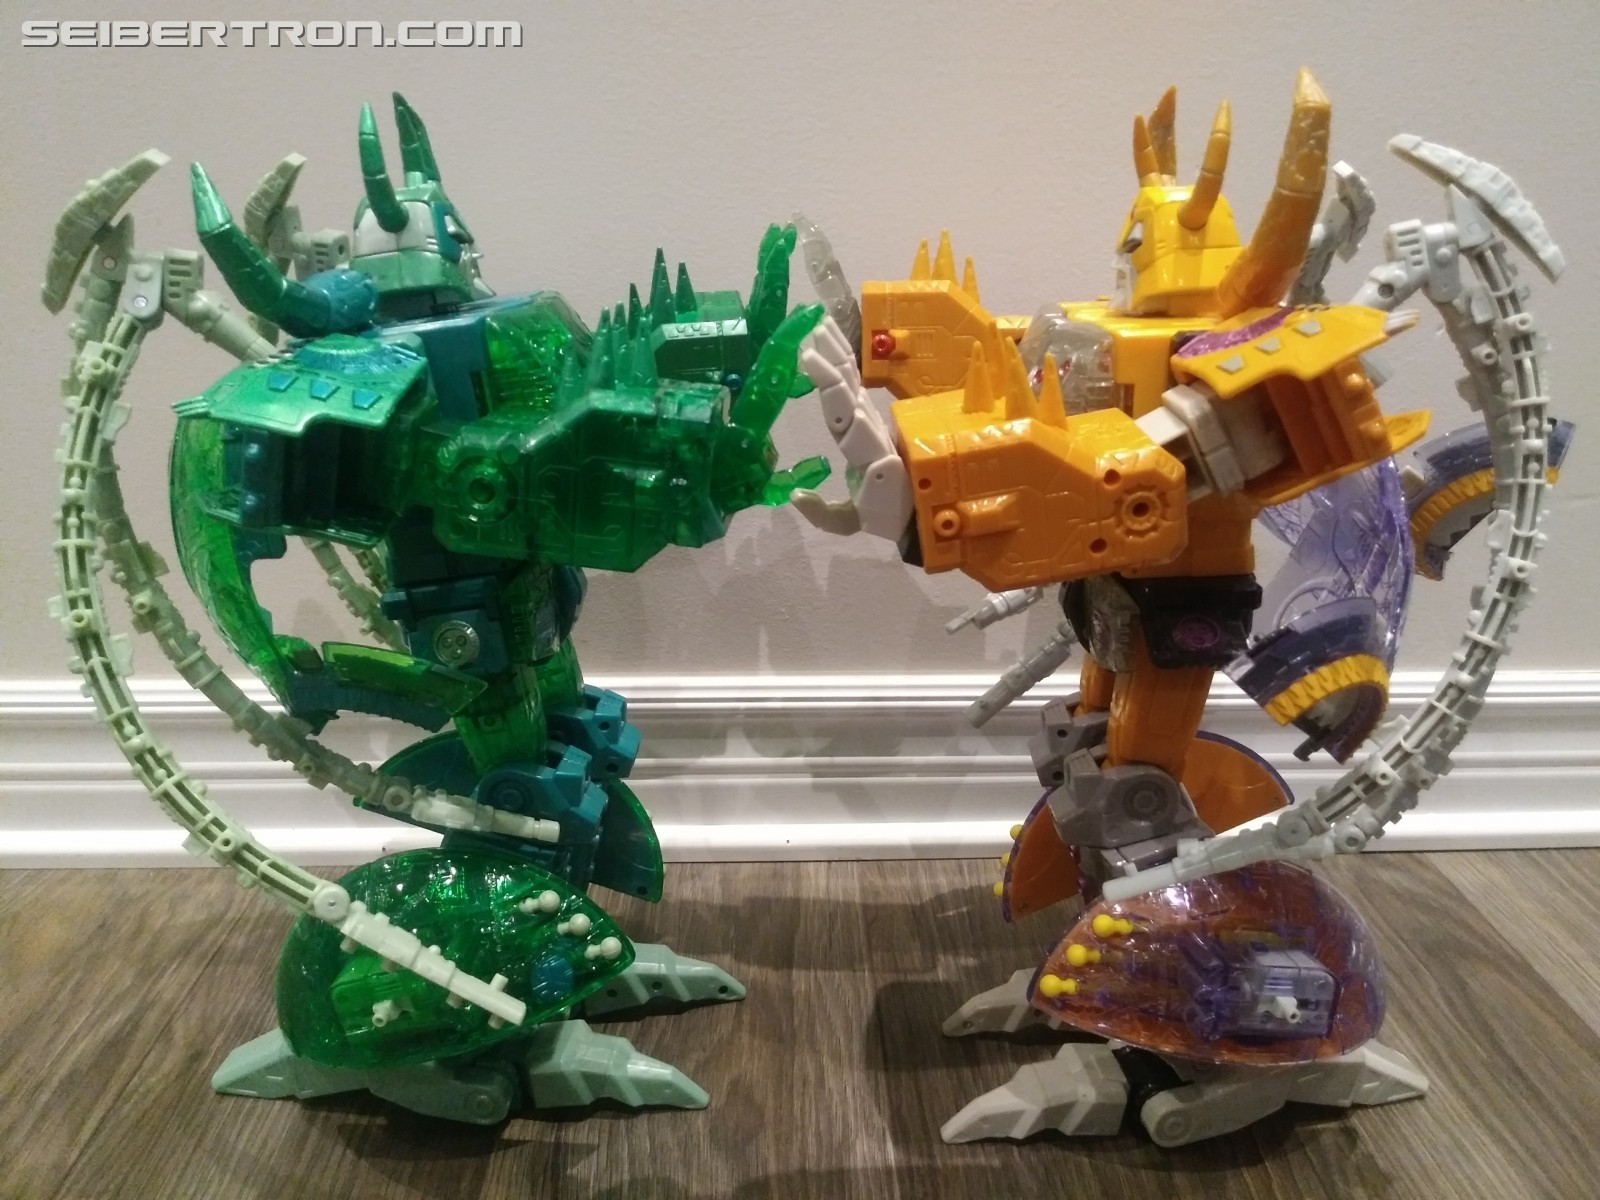 transformers 4 unicron toy